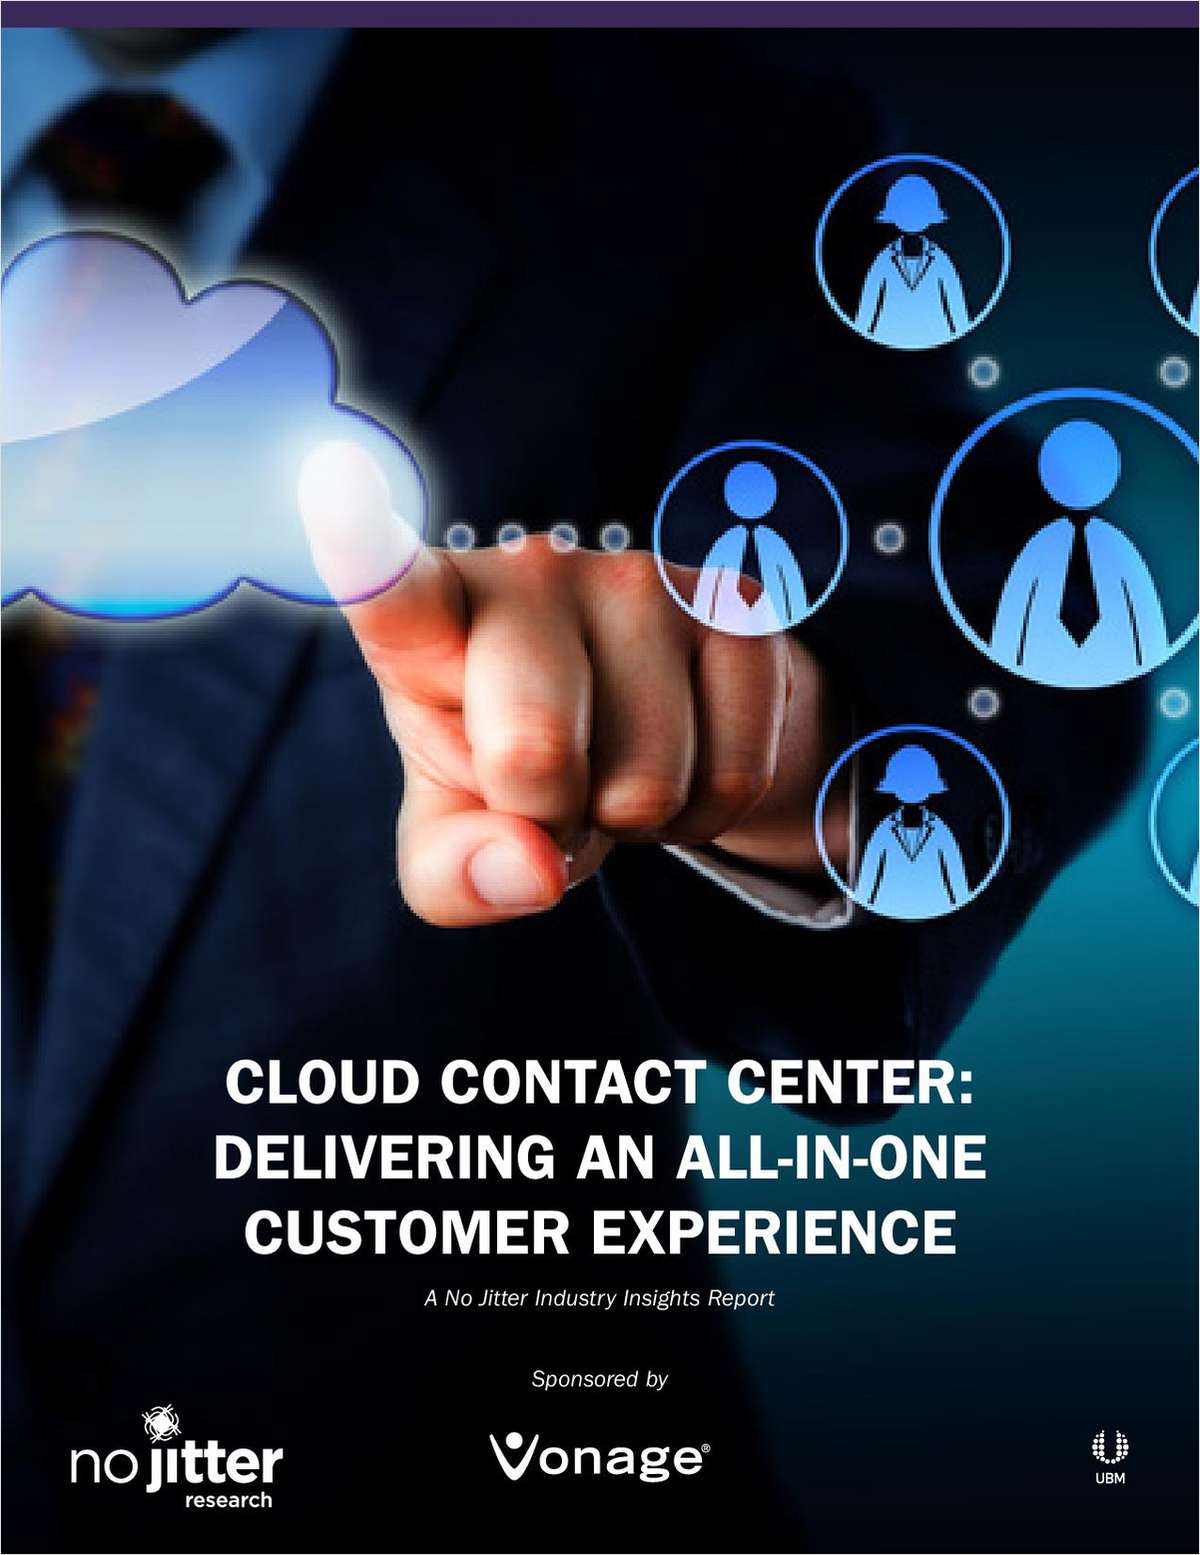 The Cloud Contact Center